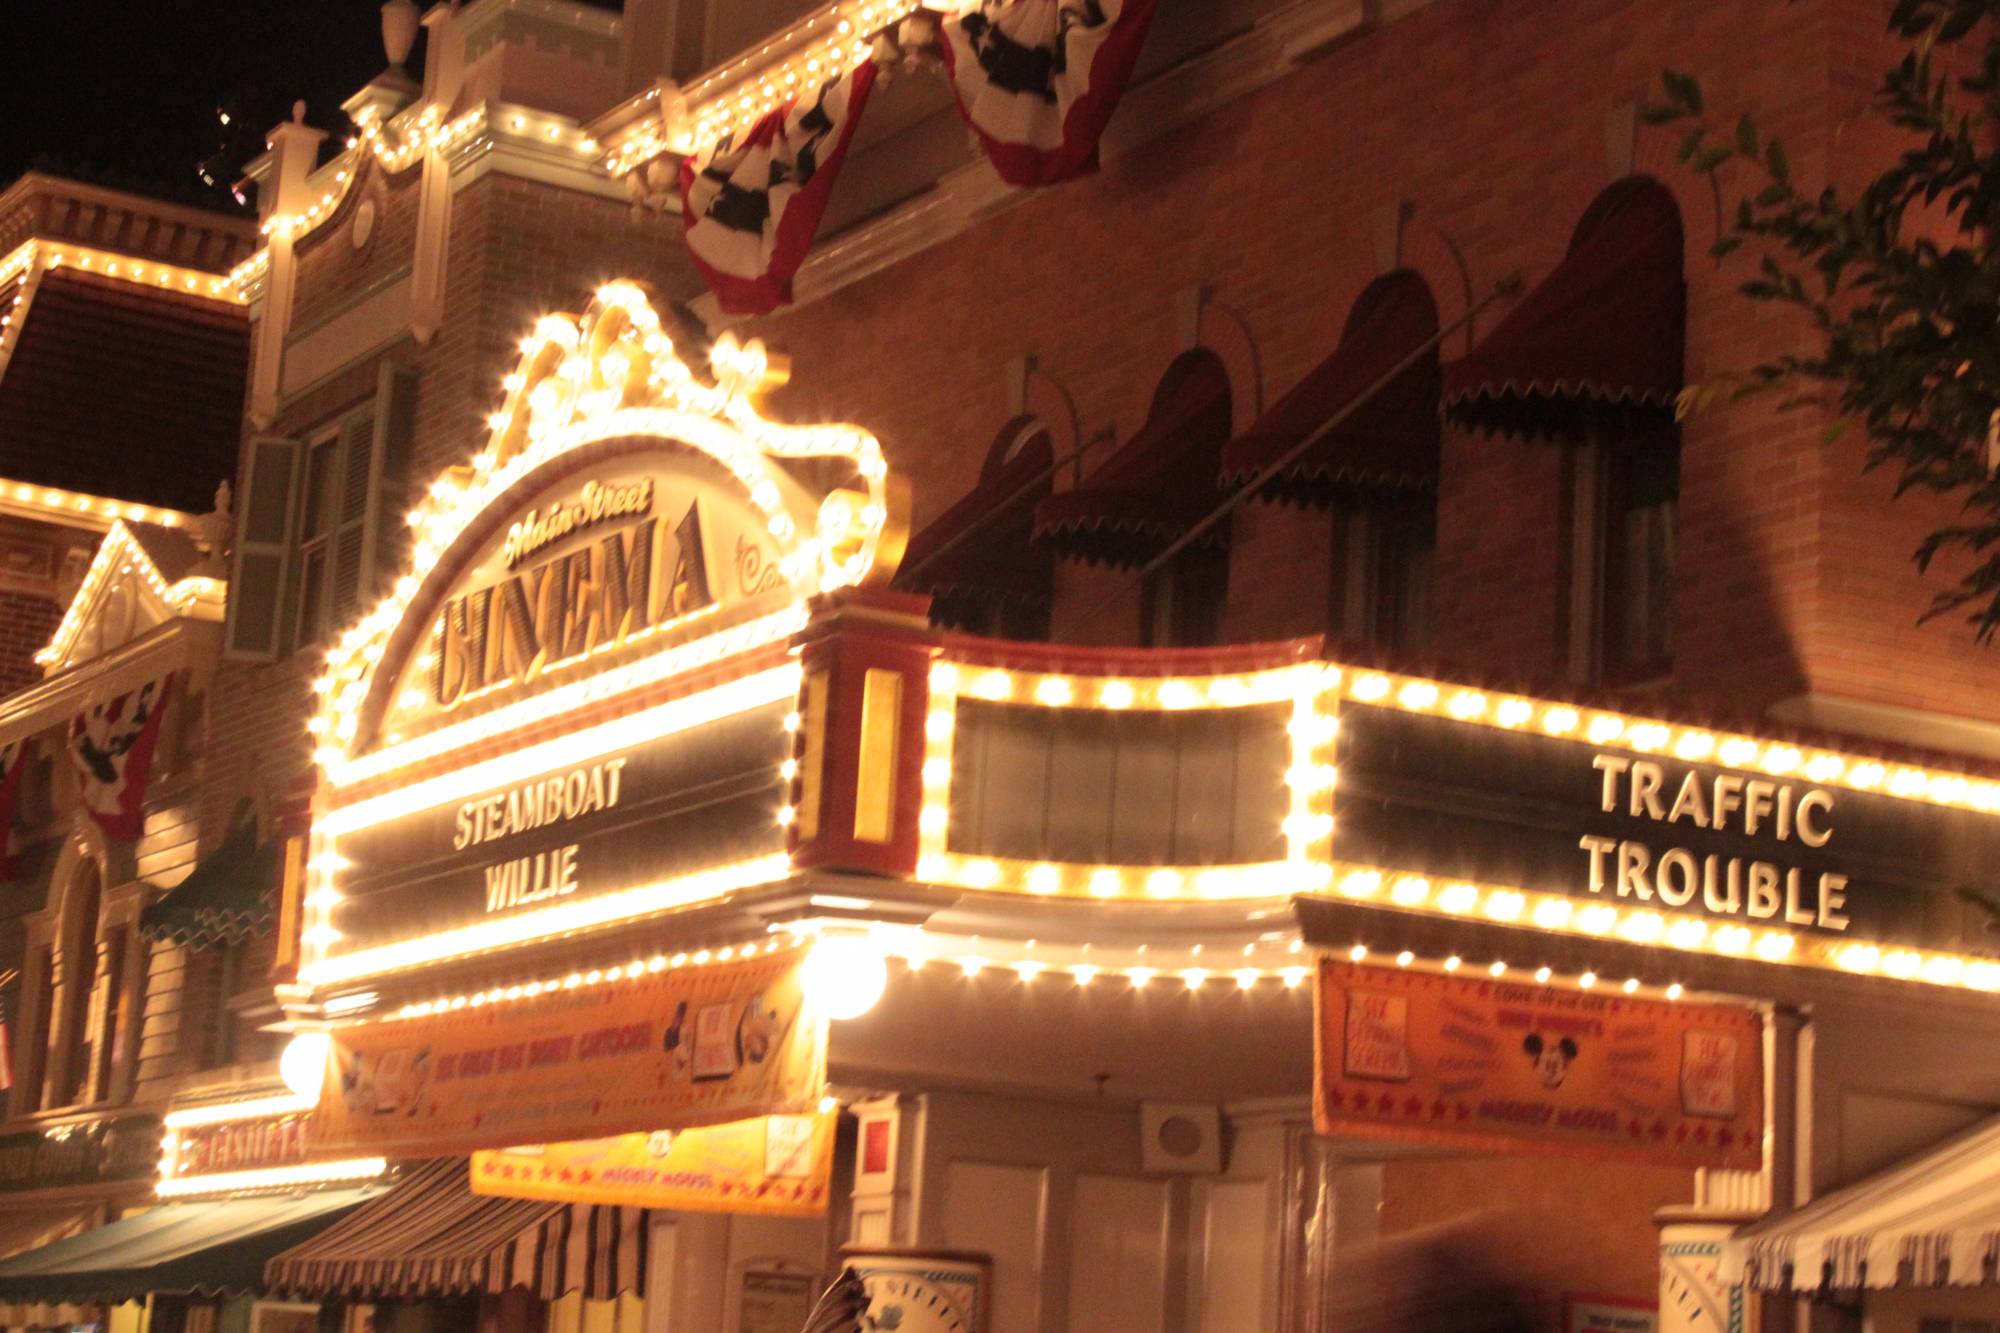 Disneyland - Main Street USA - Main Street Cinema